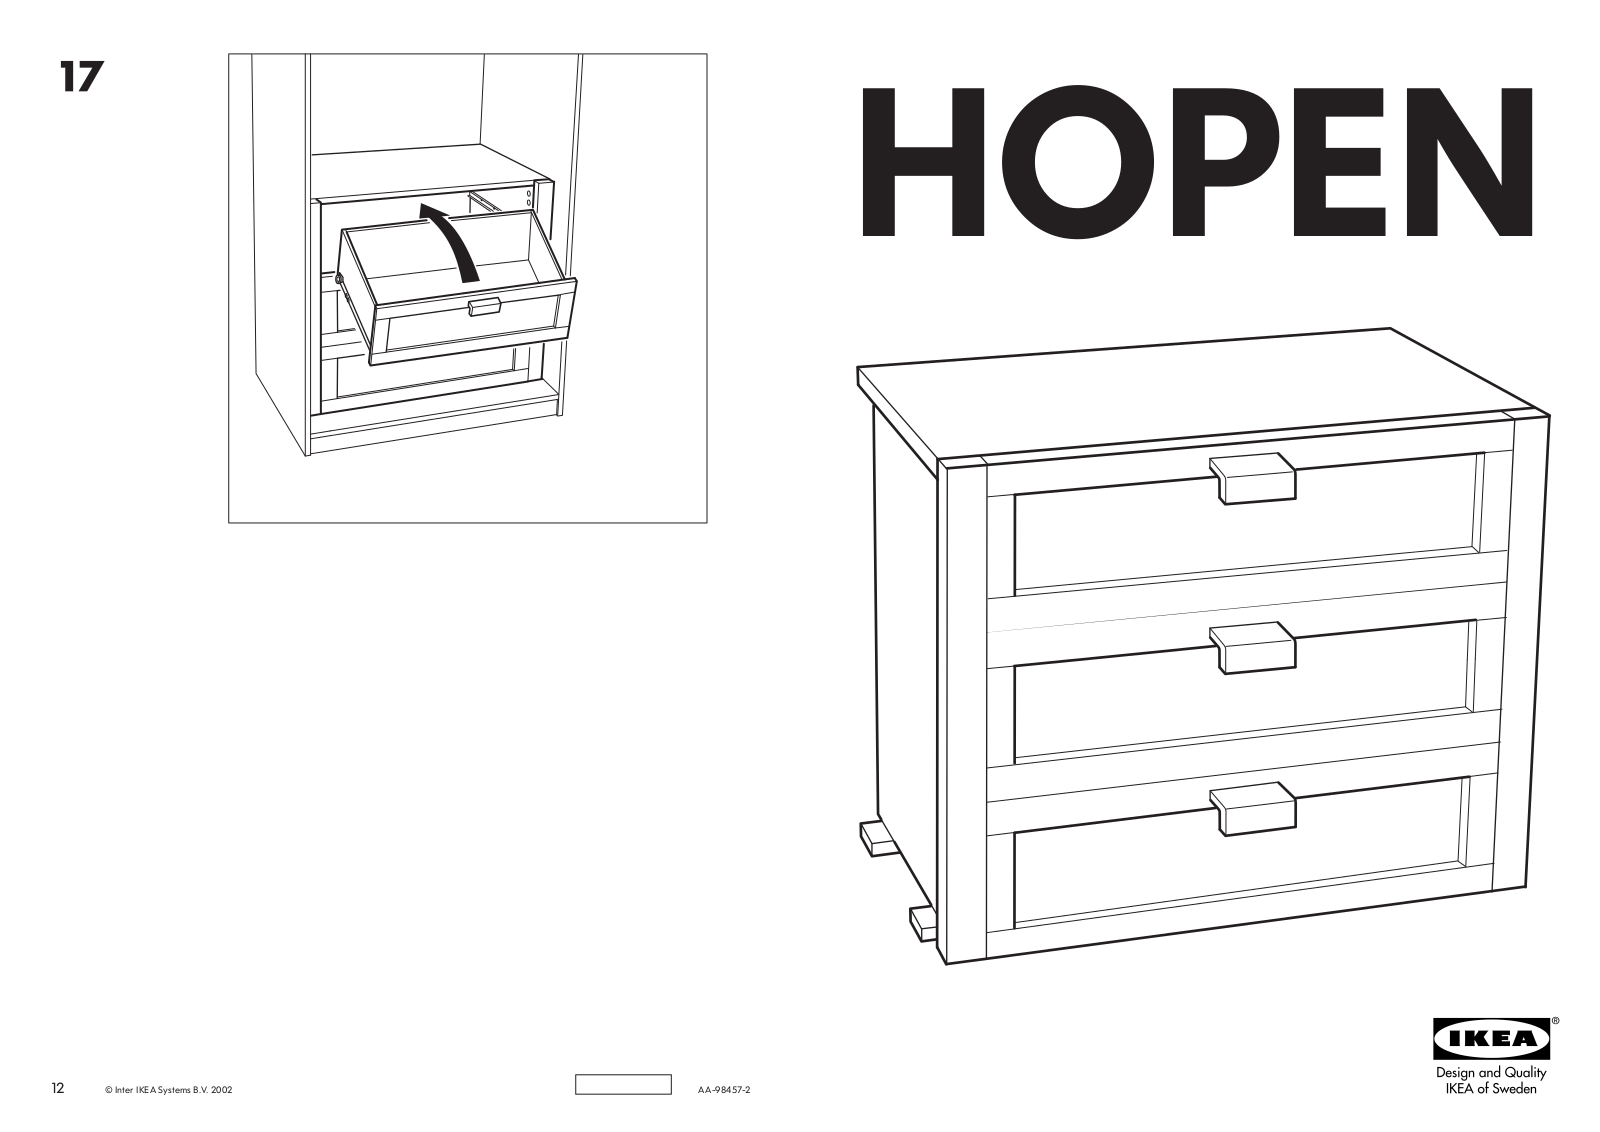 IKEA HOPEN INTERIOR CHEST DRAWERS 24